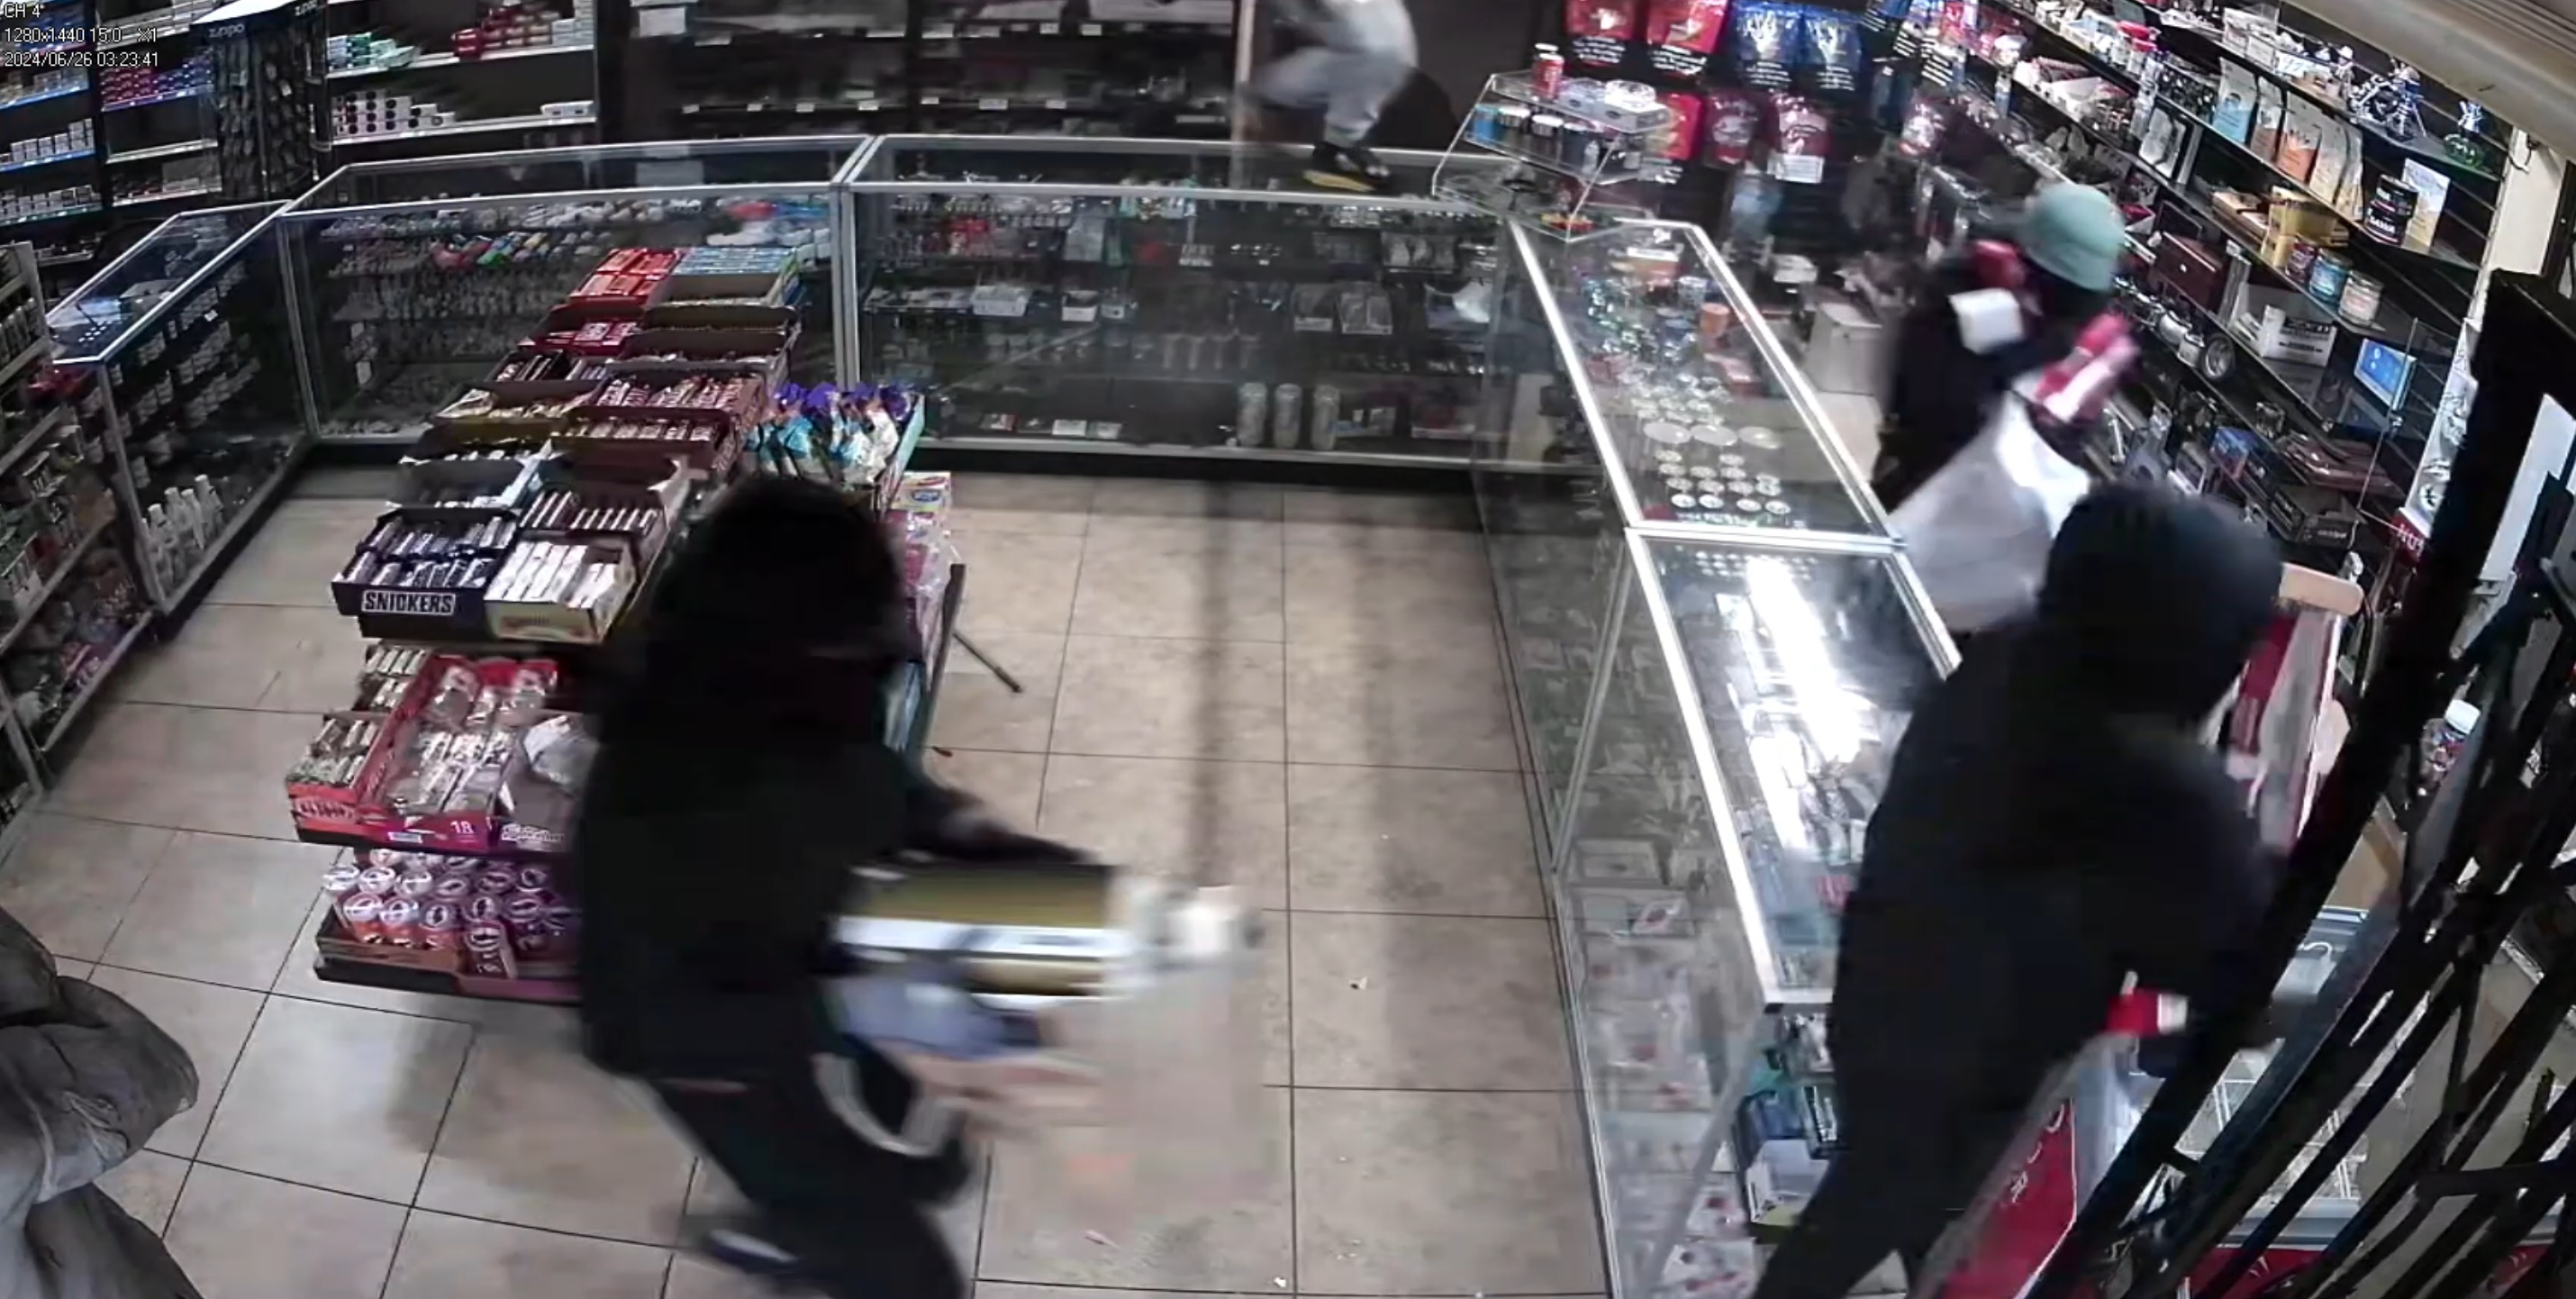 A still taken from surveillance video shows thieves ransacking a smoke shop.